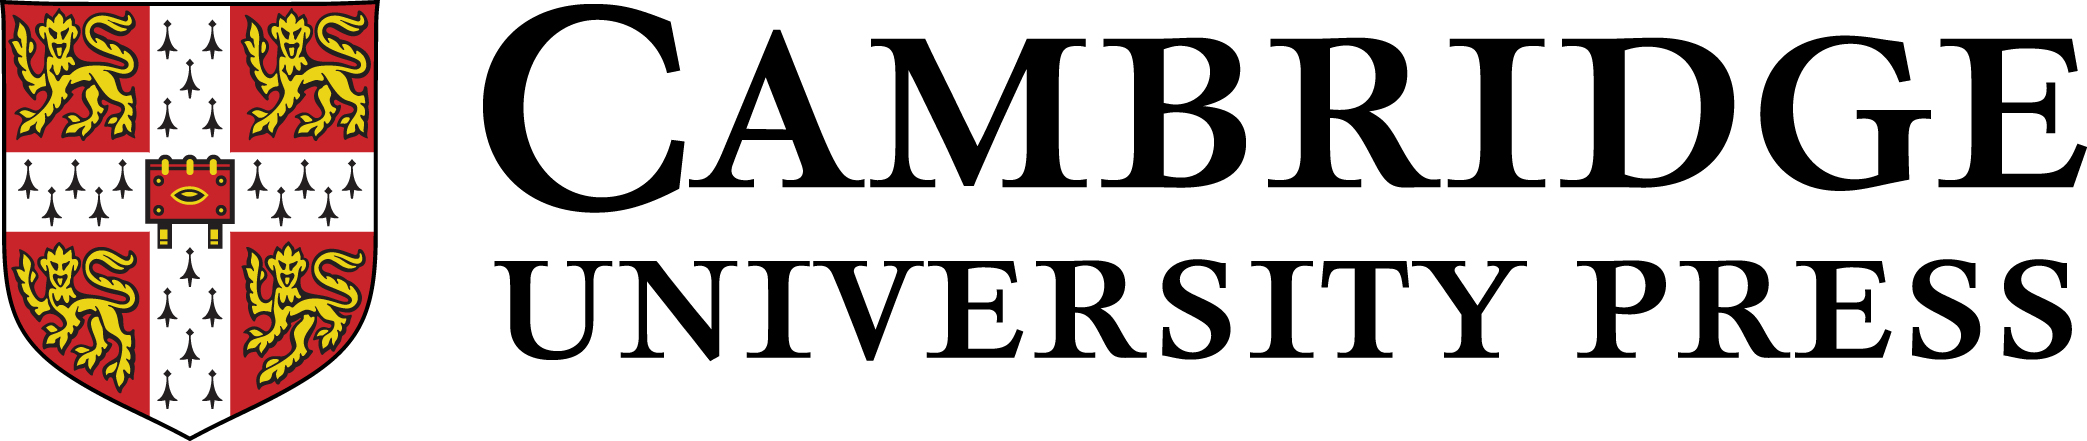 CAMBRIDGE UNIVERSITY PRESS | EMRS